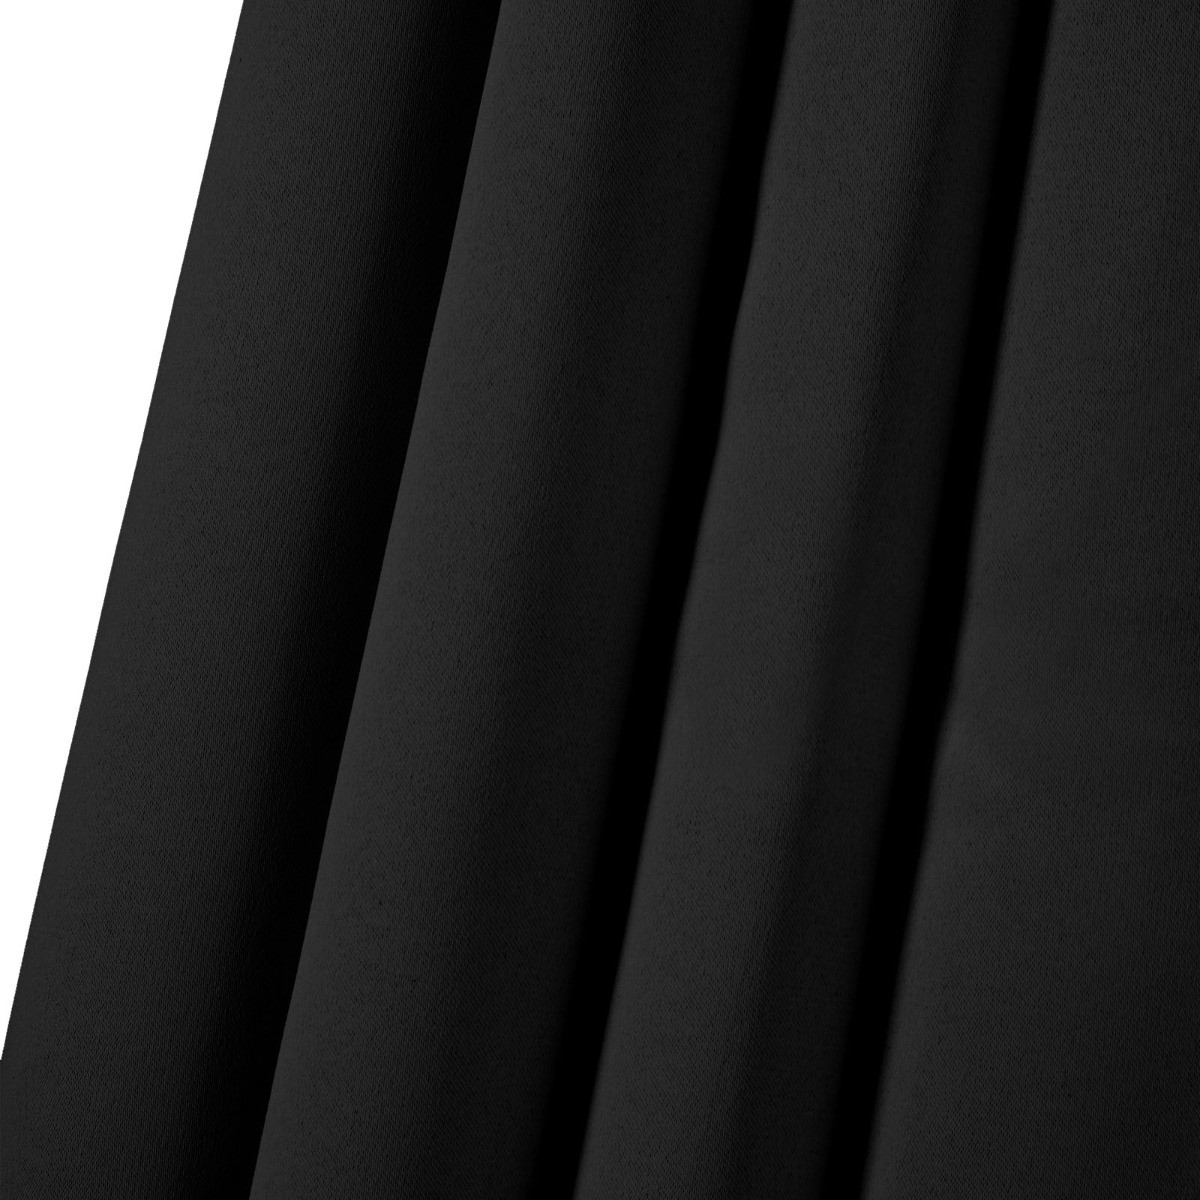 Dreamscene Pencil Pleat Thermal Blackout Curtains - Black, 66" x 54">